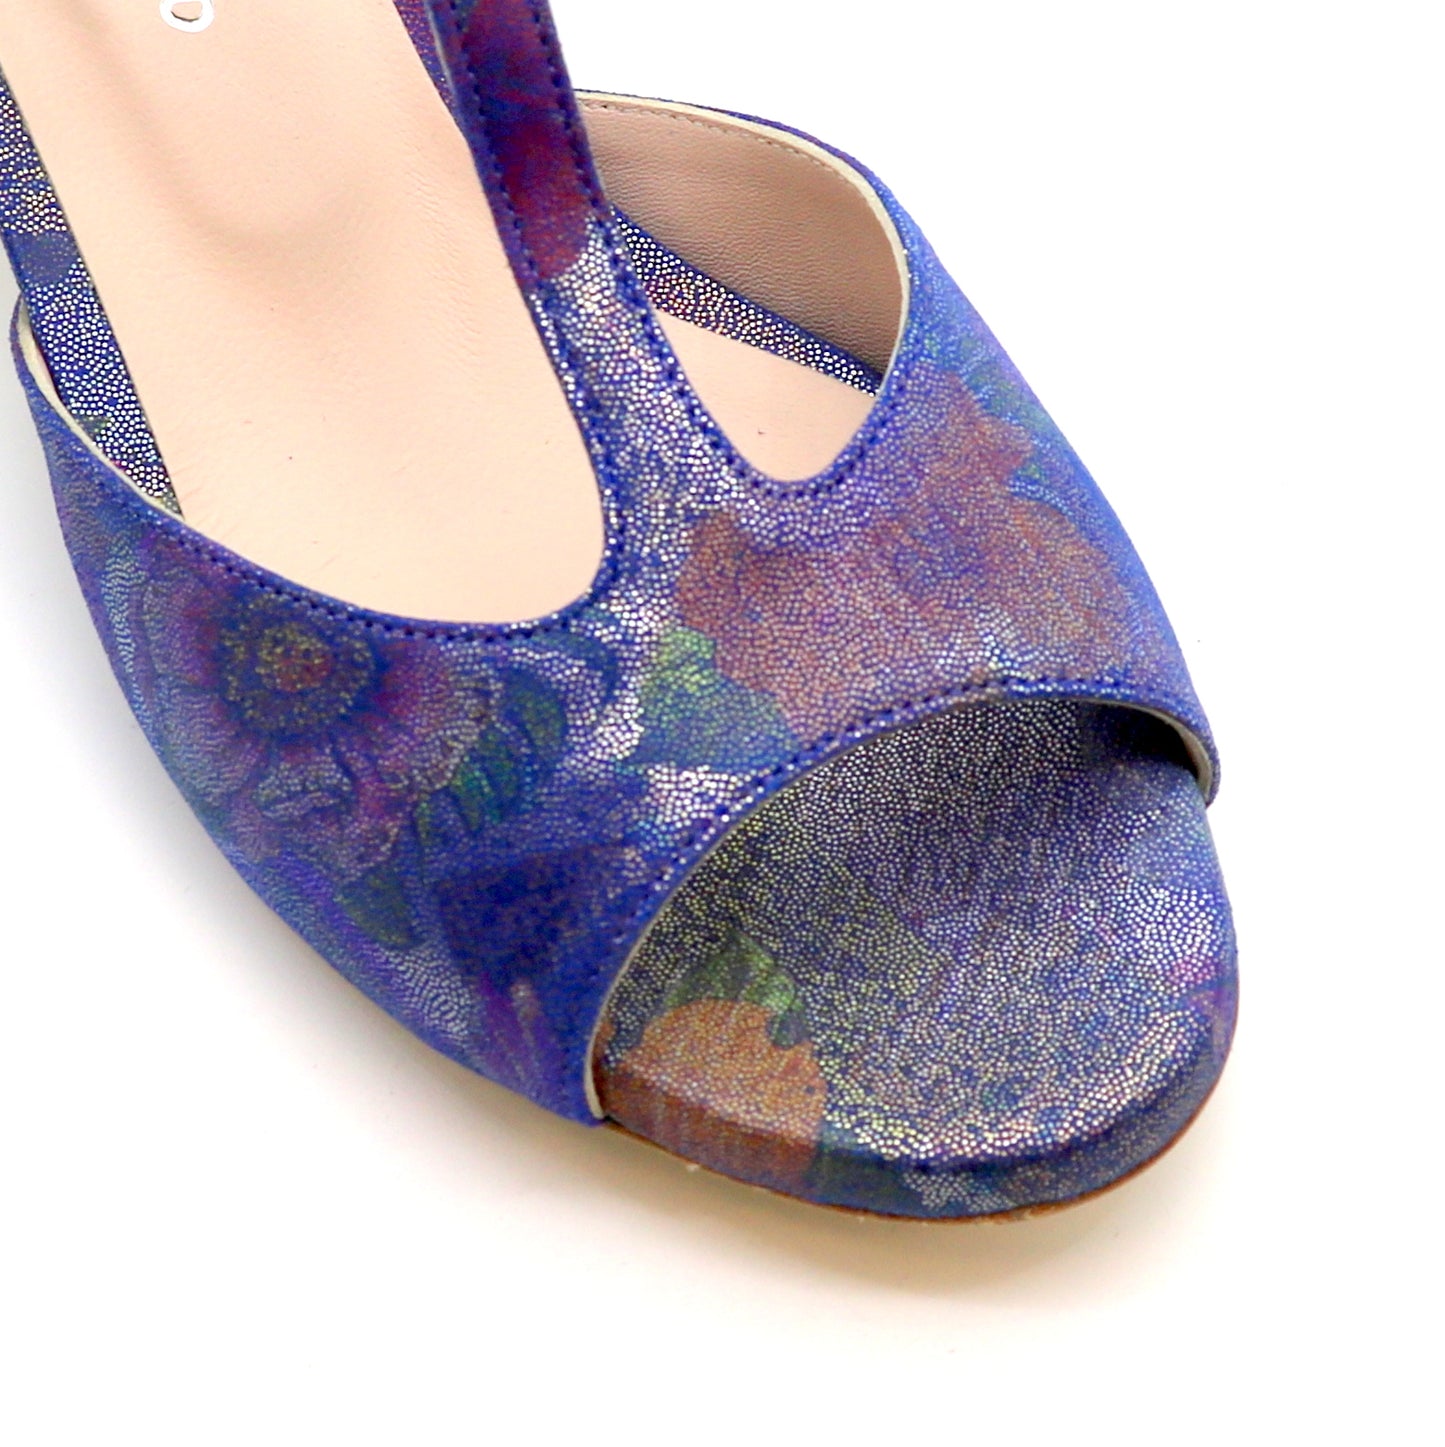 Sencillo Anaïs blue printed heels 4cm